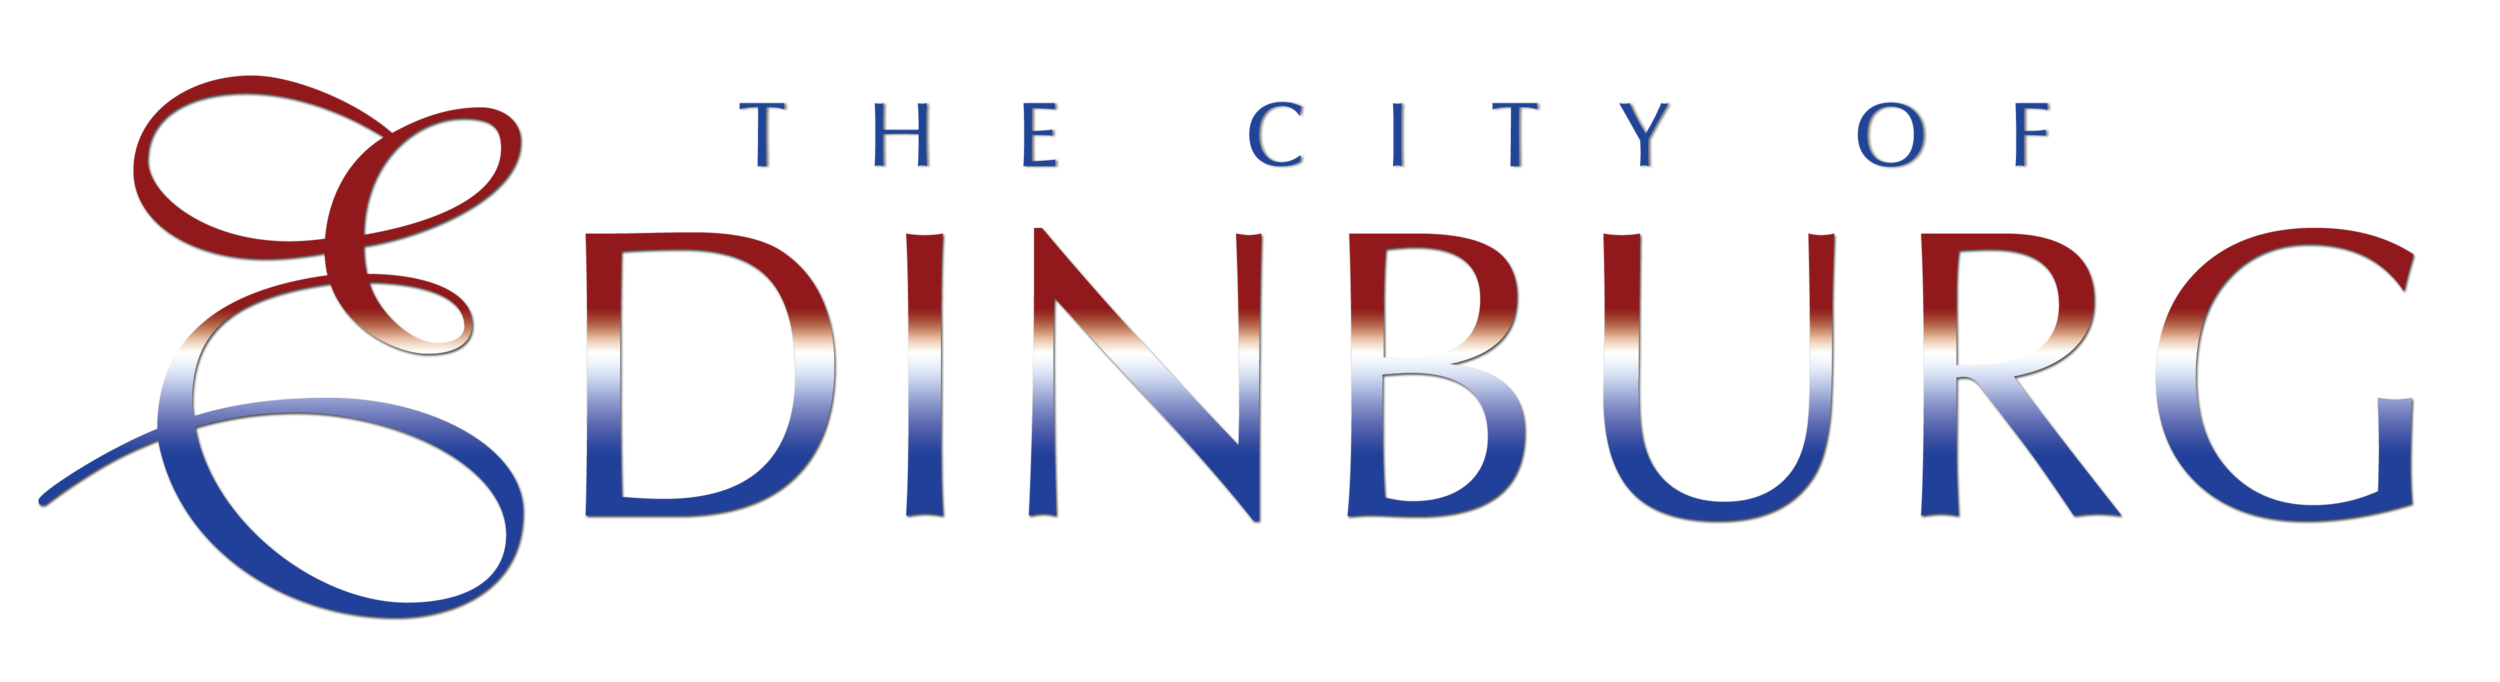 city logo transparent 2.png